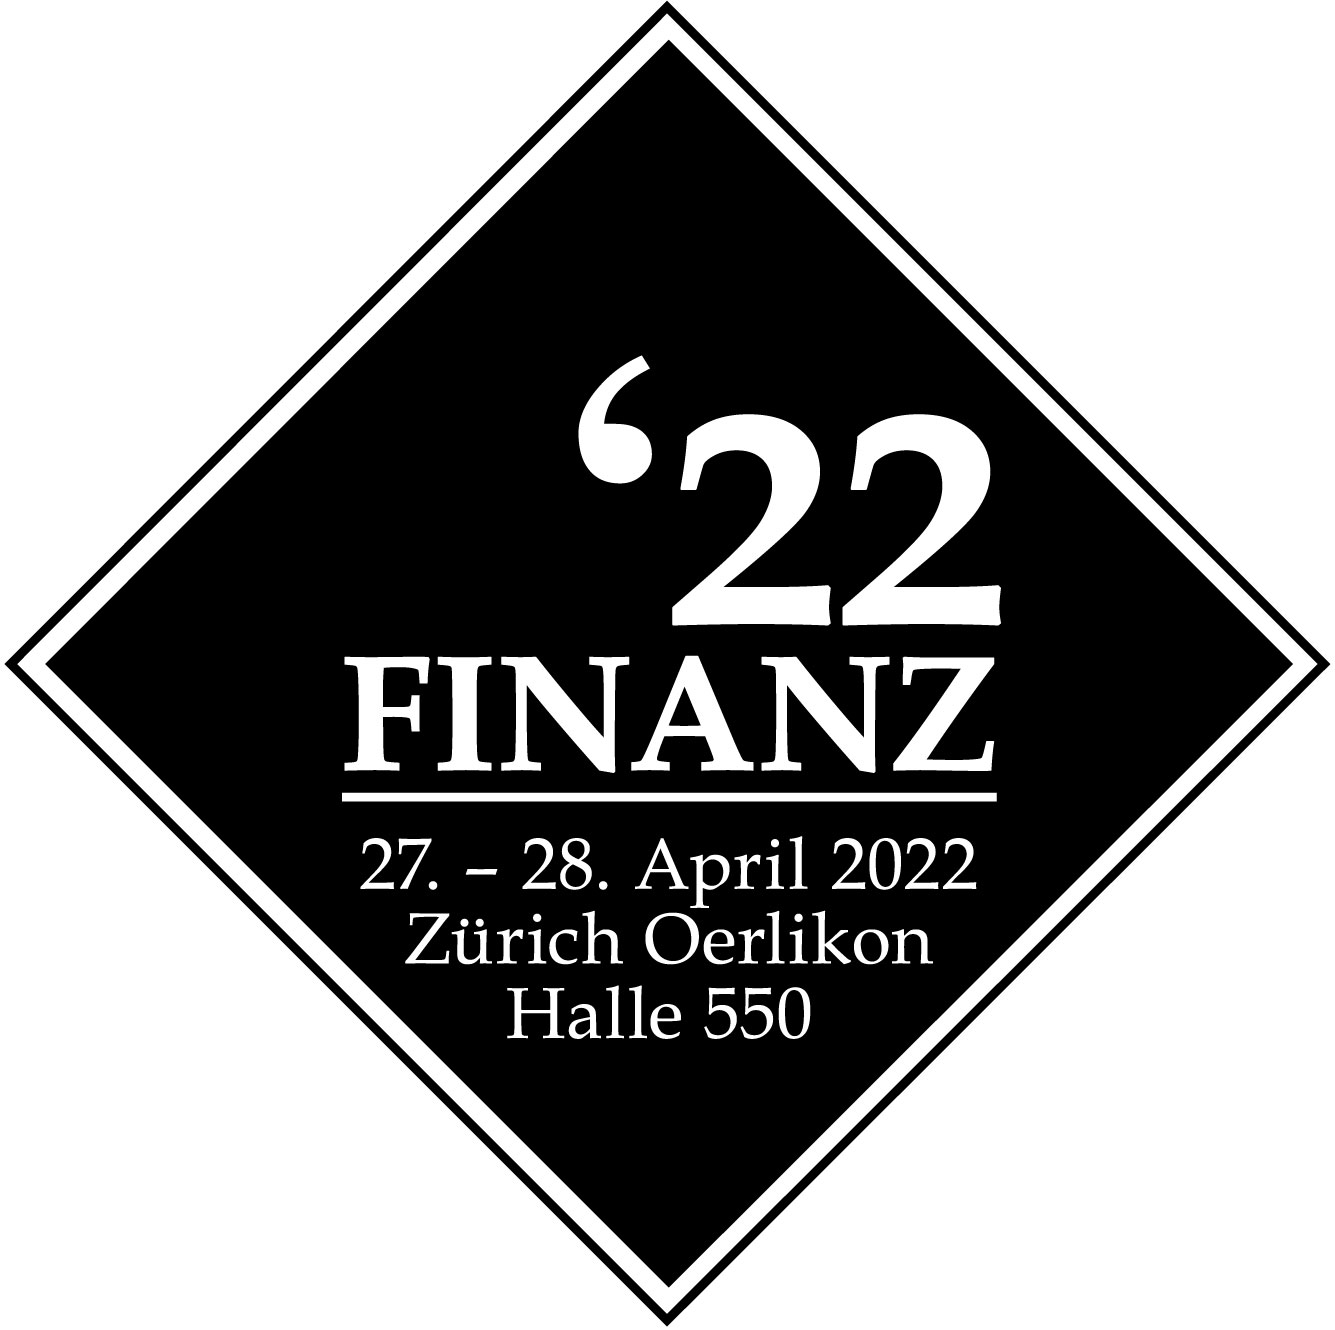 FINANZ22 organized by JHM Finanzmesse AG